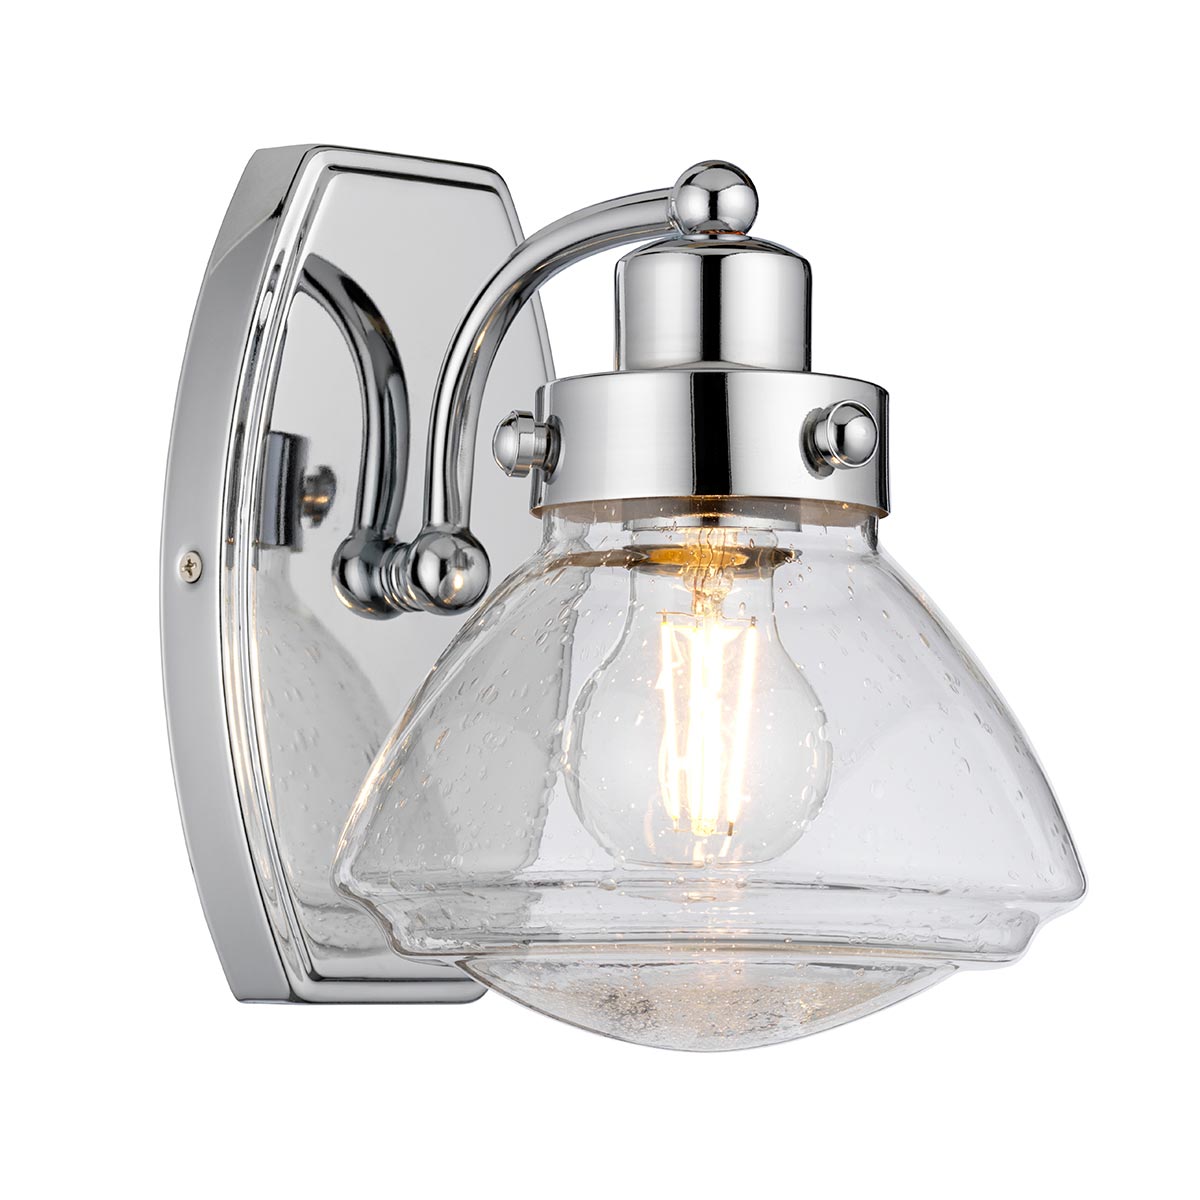 Scholar 1 Lamp Polished Chrome Bathroom Wall Light Seeded Glass